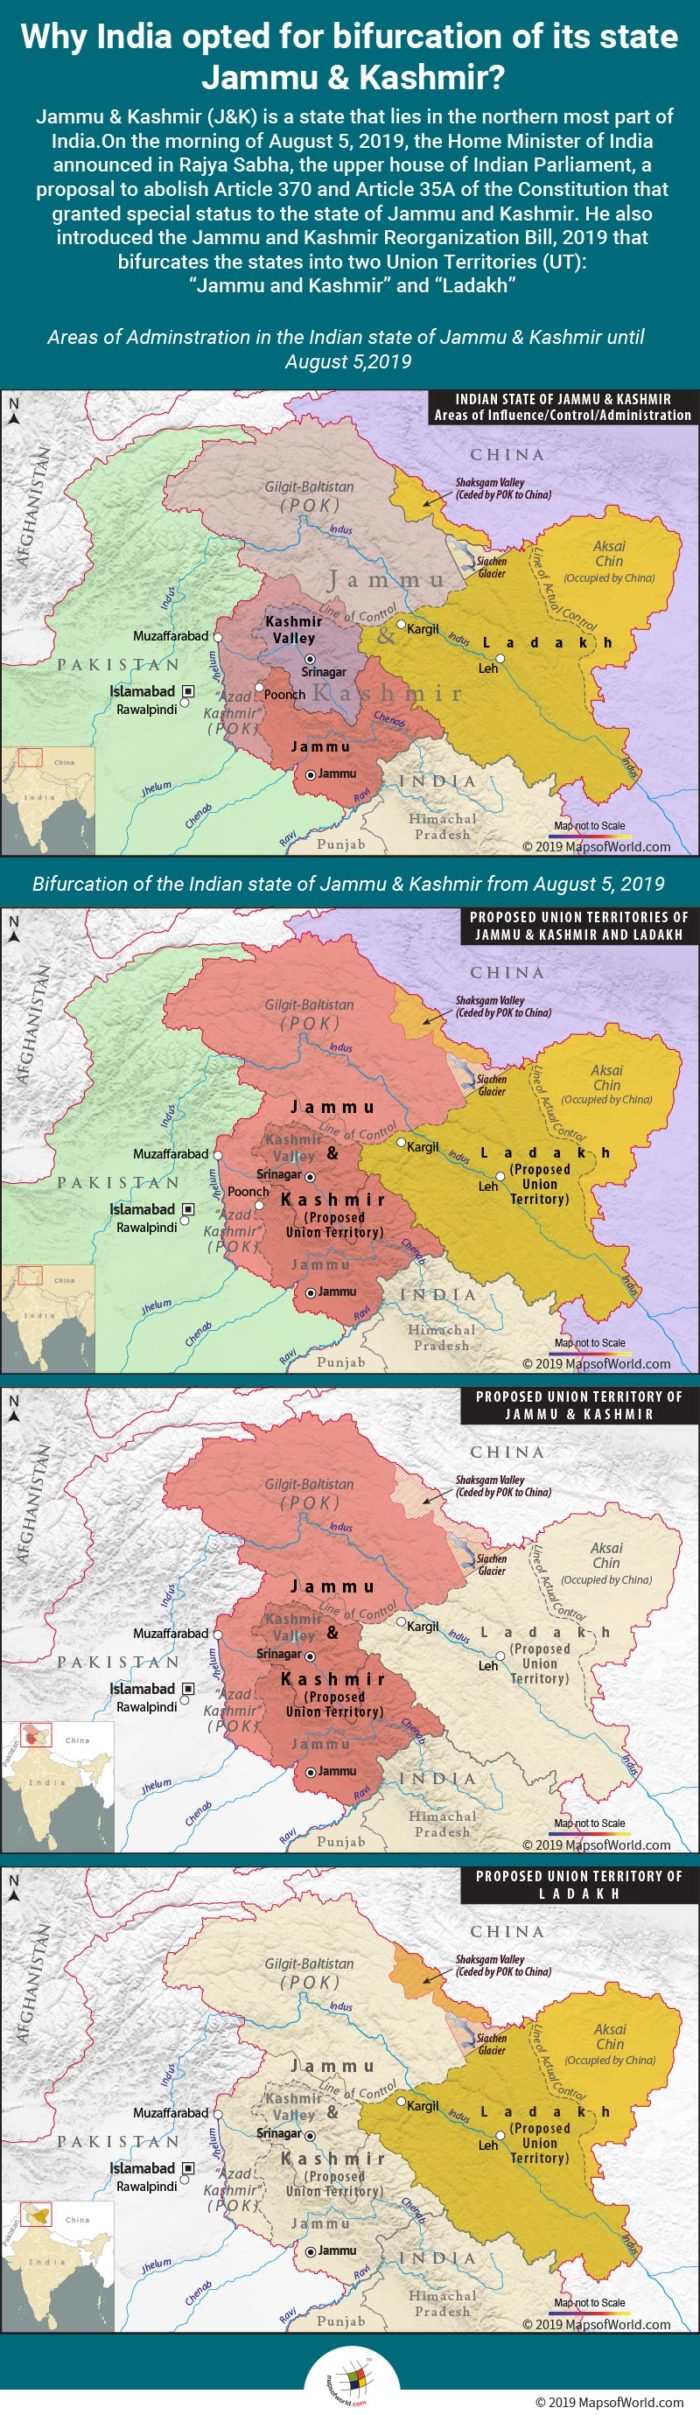 Bifurcation of the Indian State Jammu and Kashmir